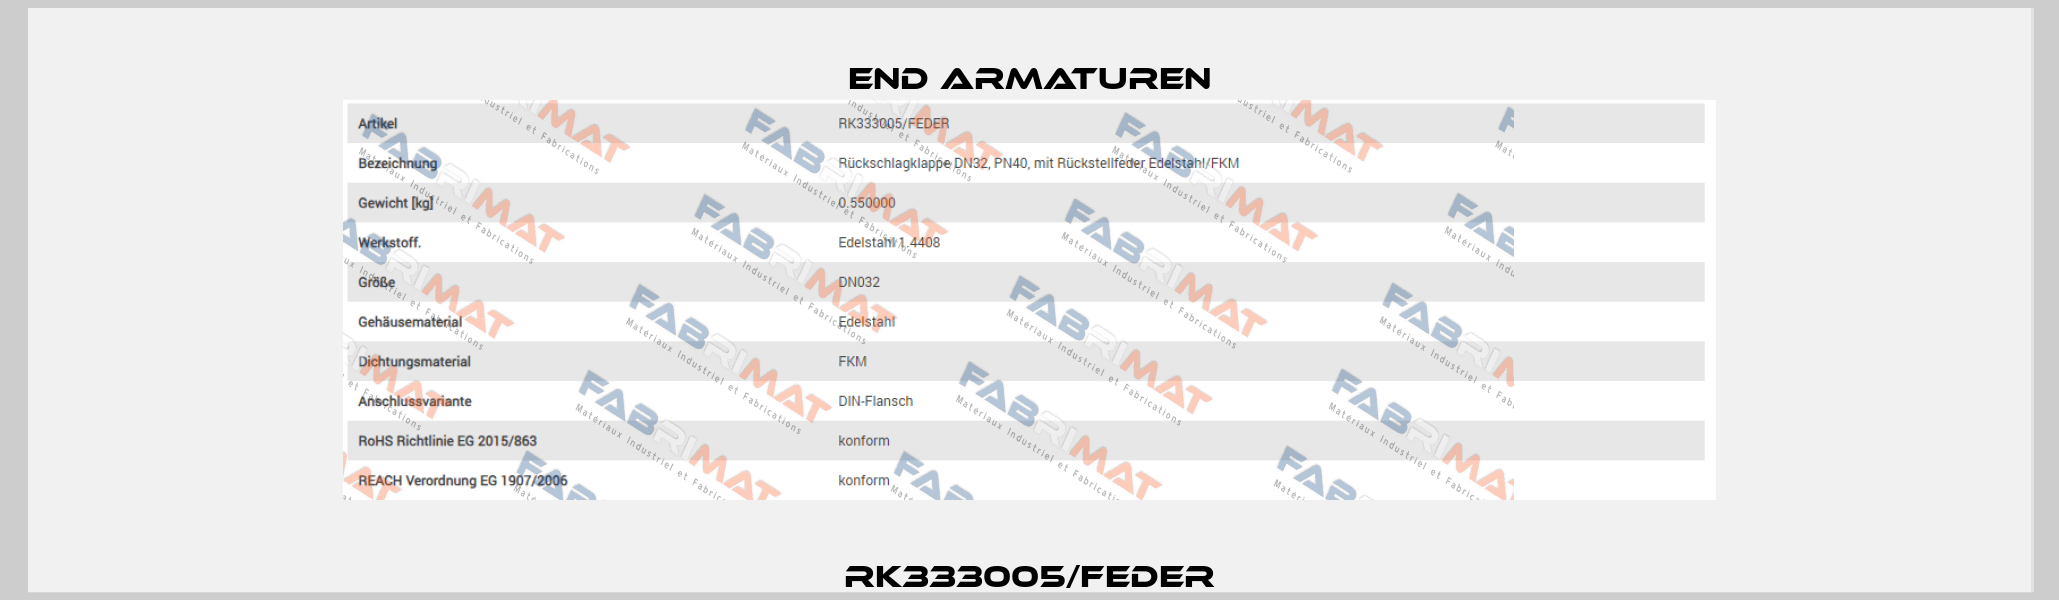 RK333005/FEDER End Armaturen